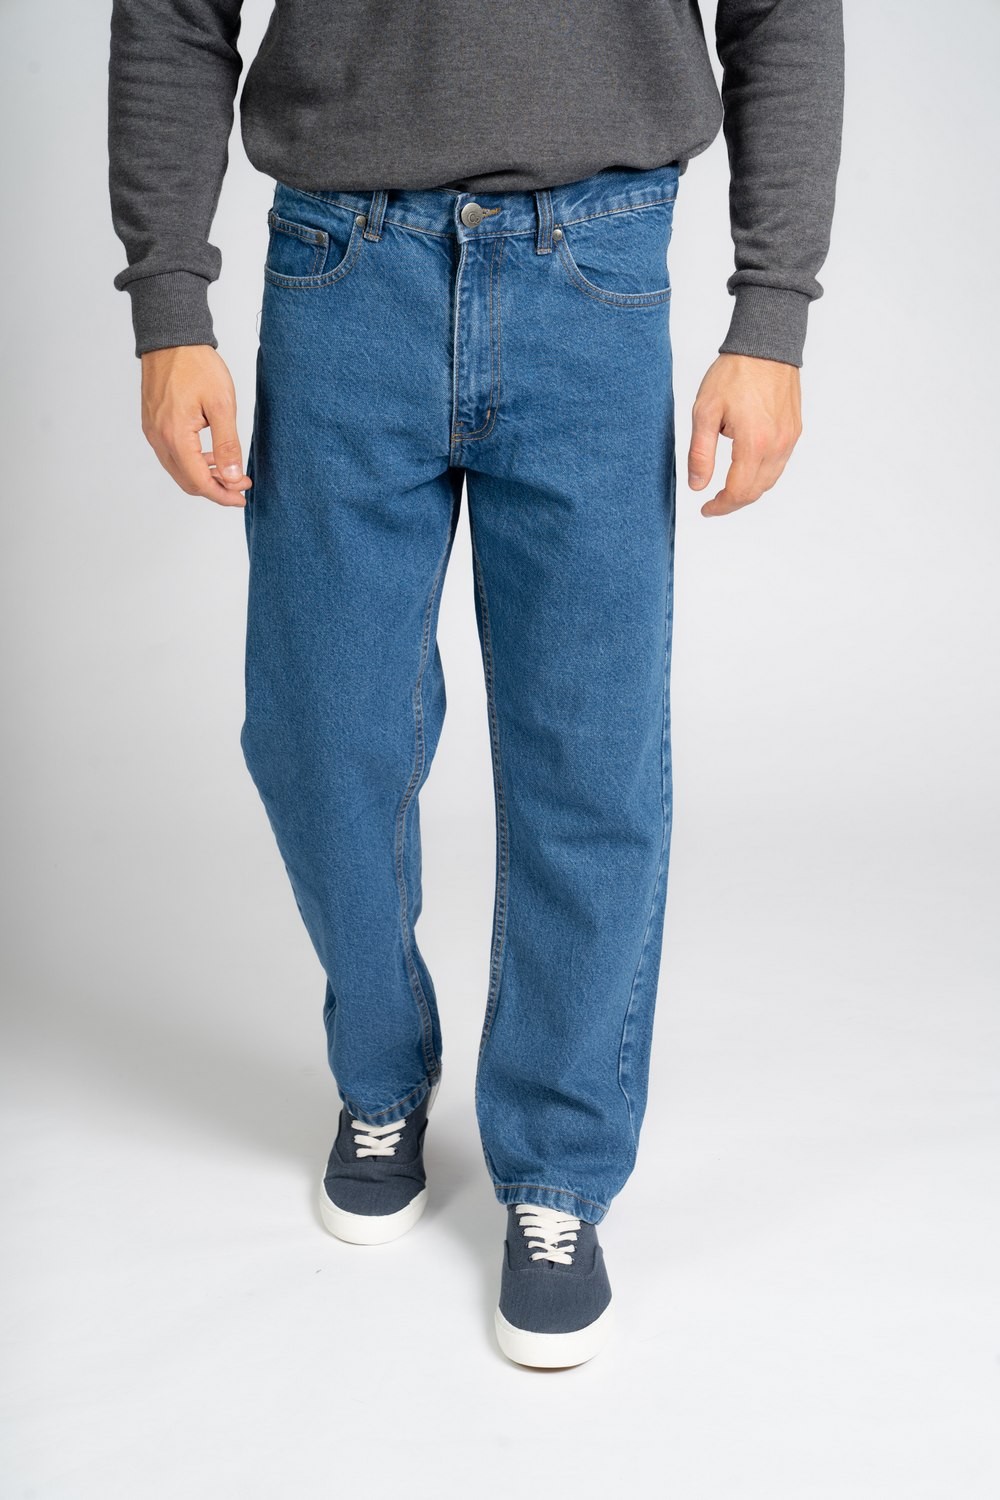 Carabou Jeans ACJ waist size 32S